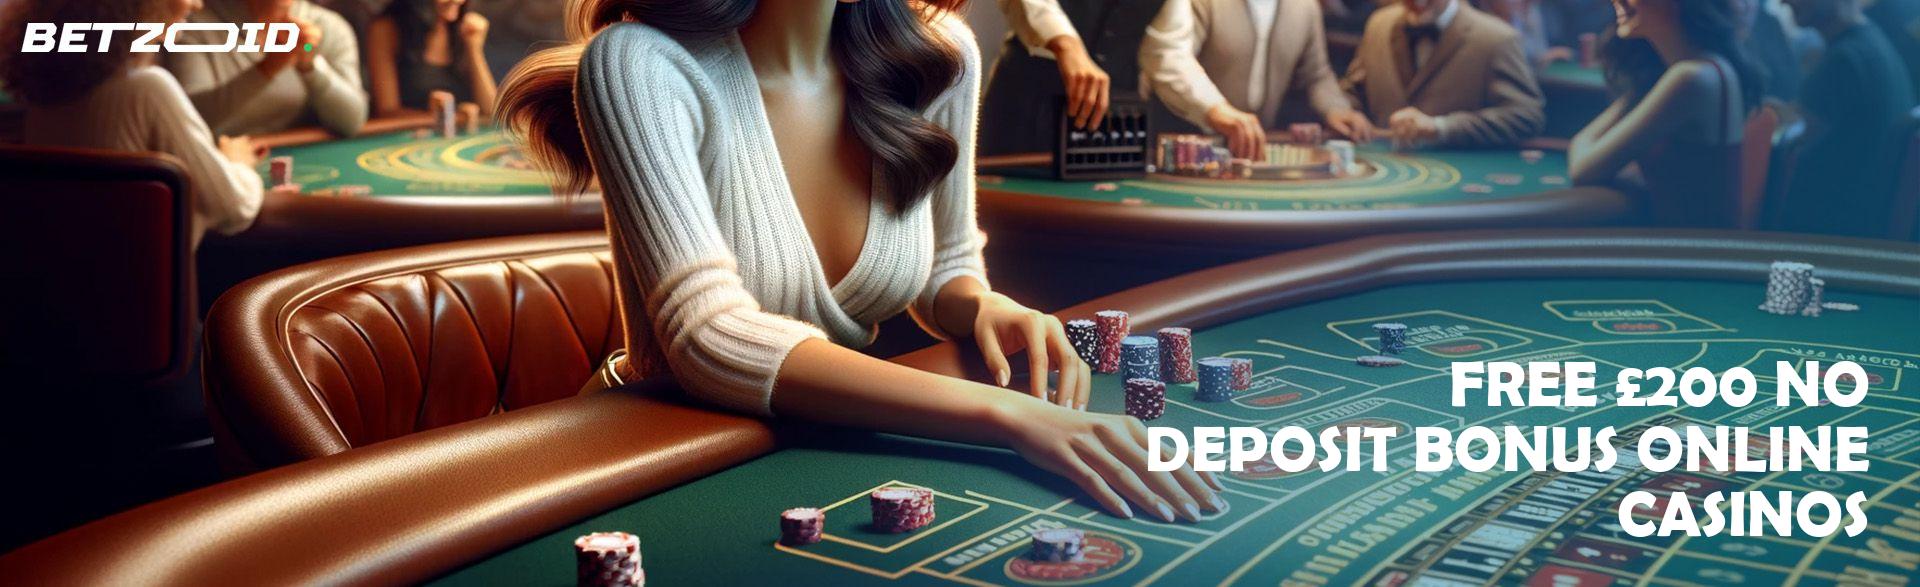 Free £200 No Deposit Bonus Online Casinos.